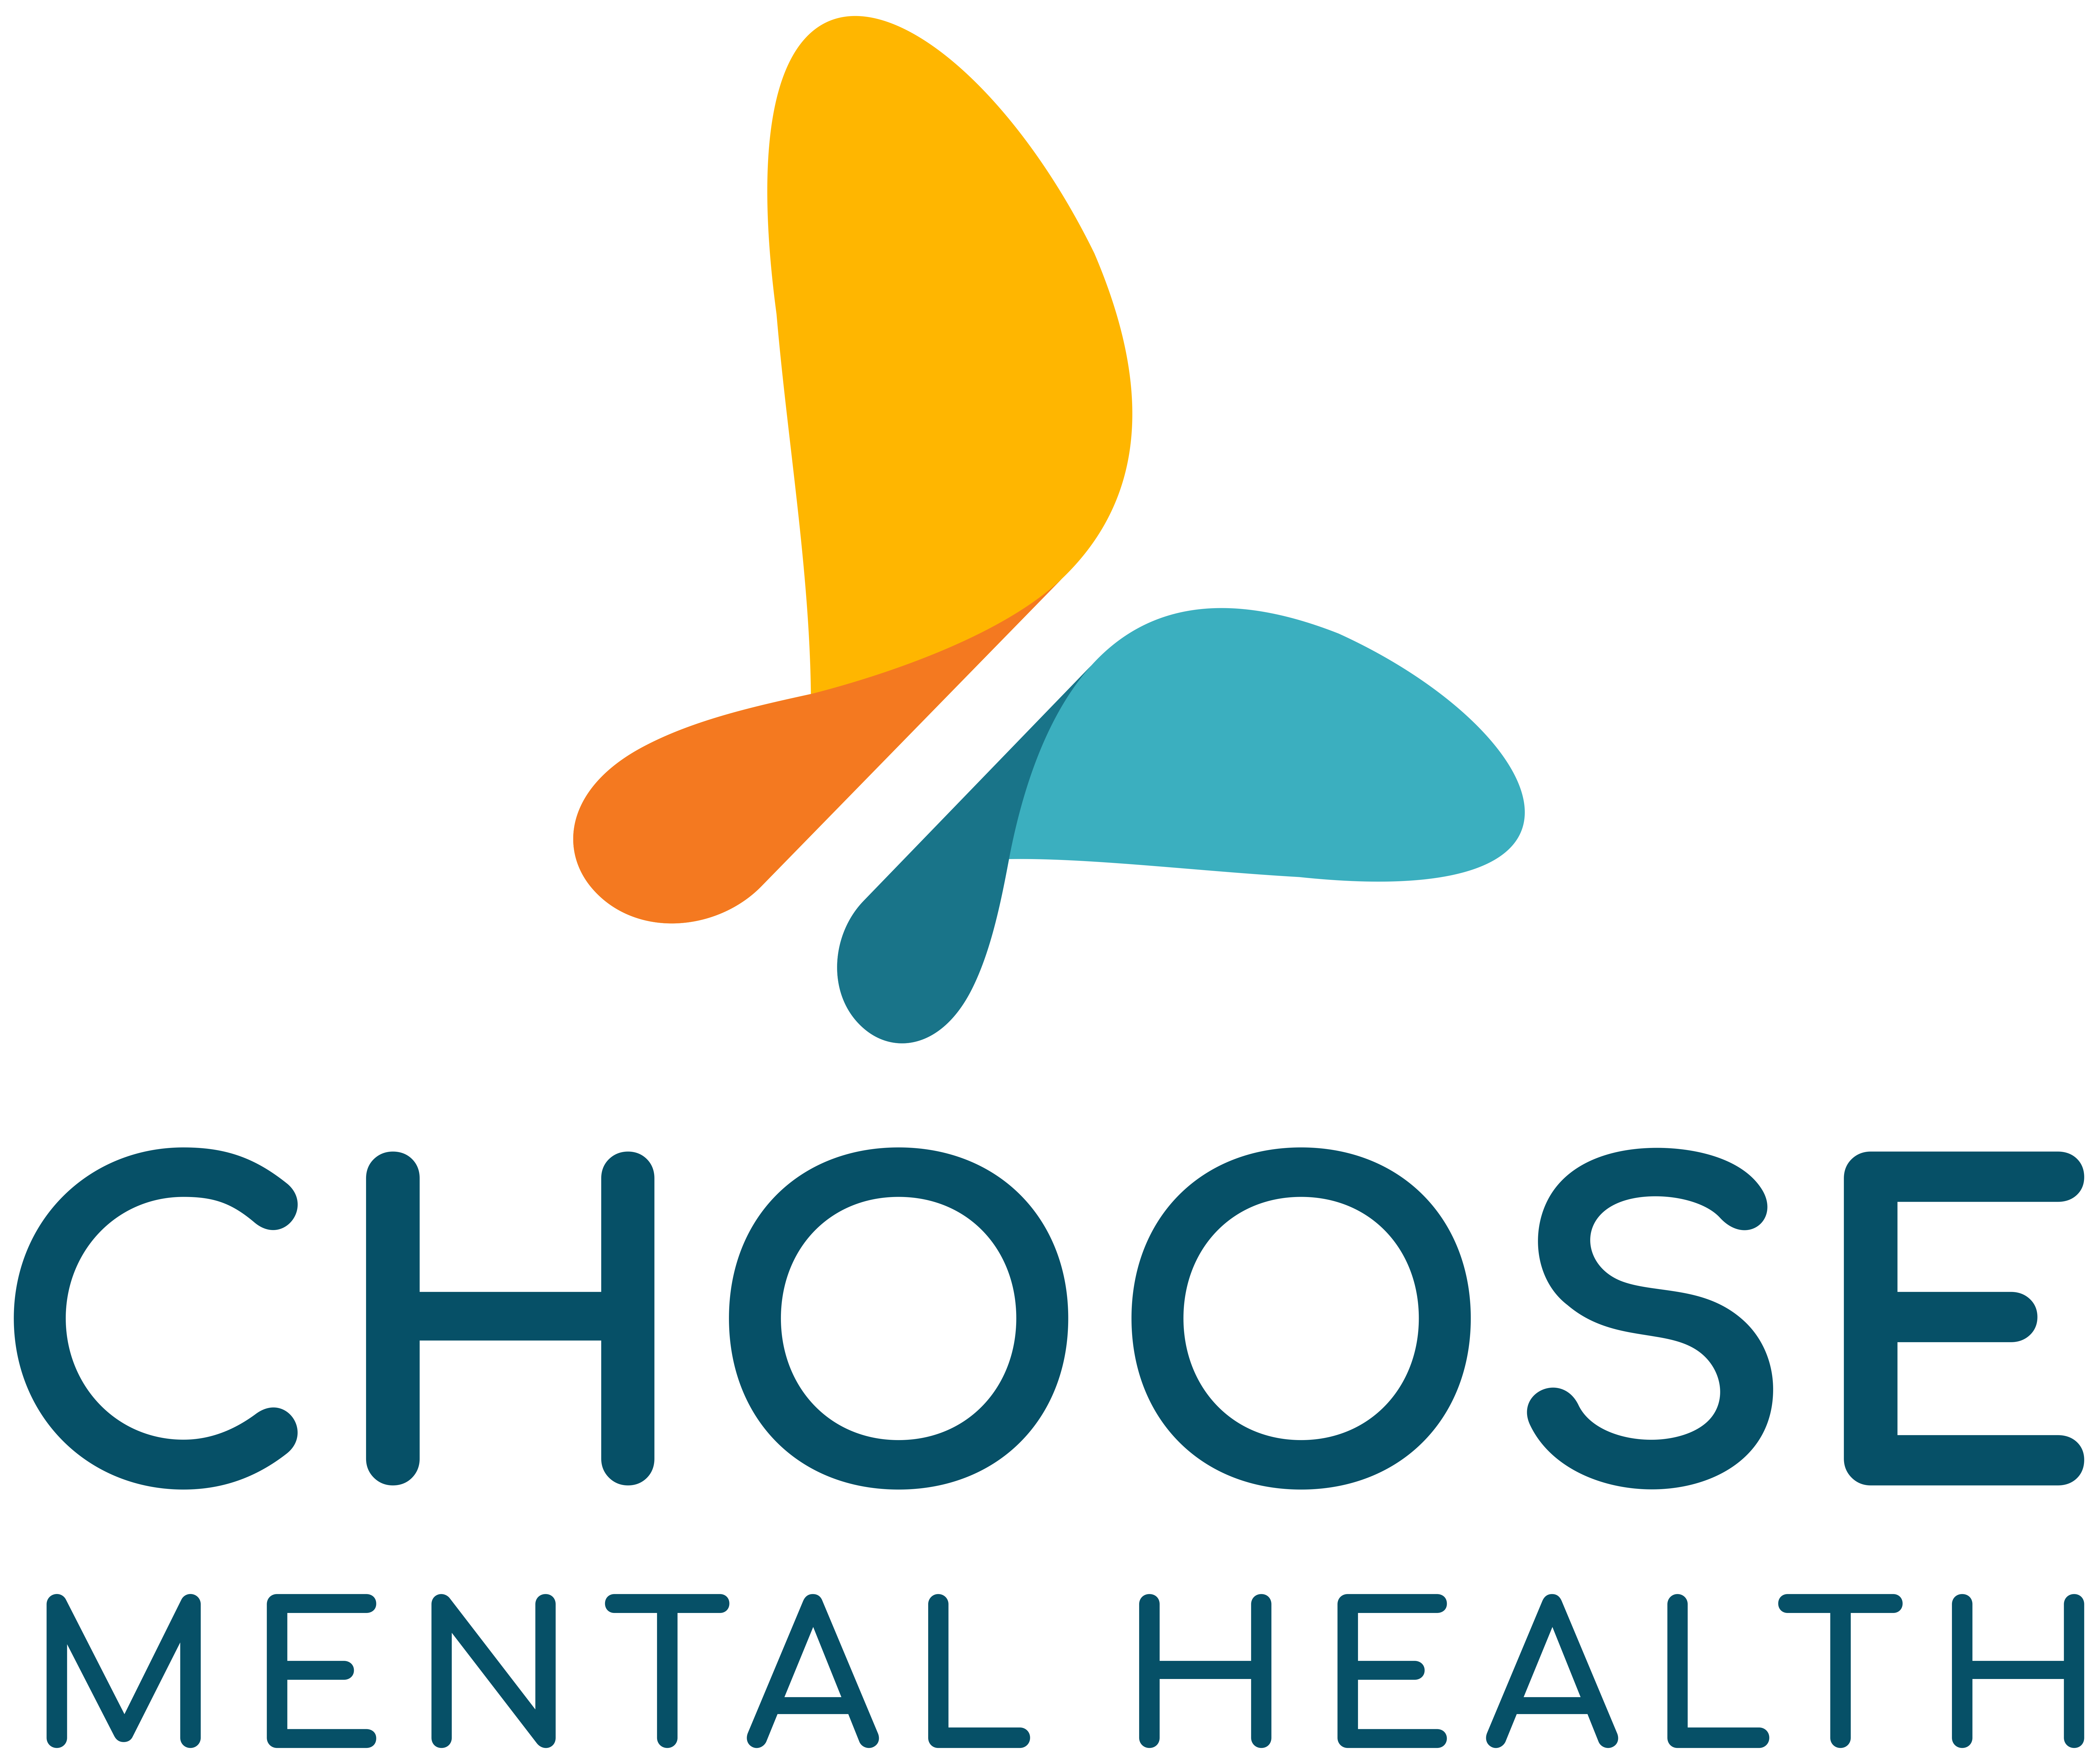 choose_mental_health_logo_icon.png